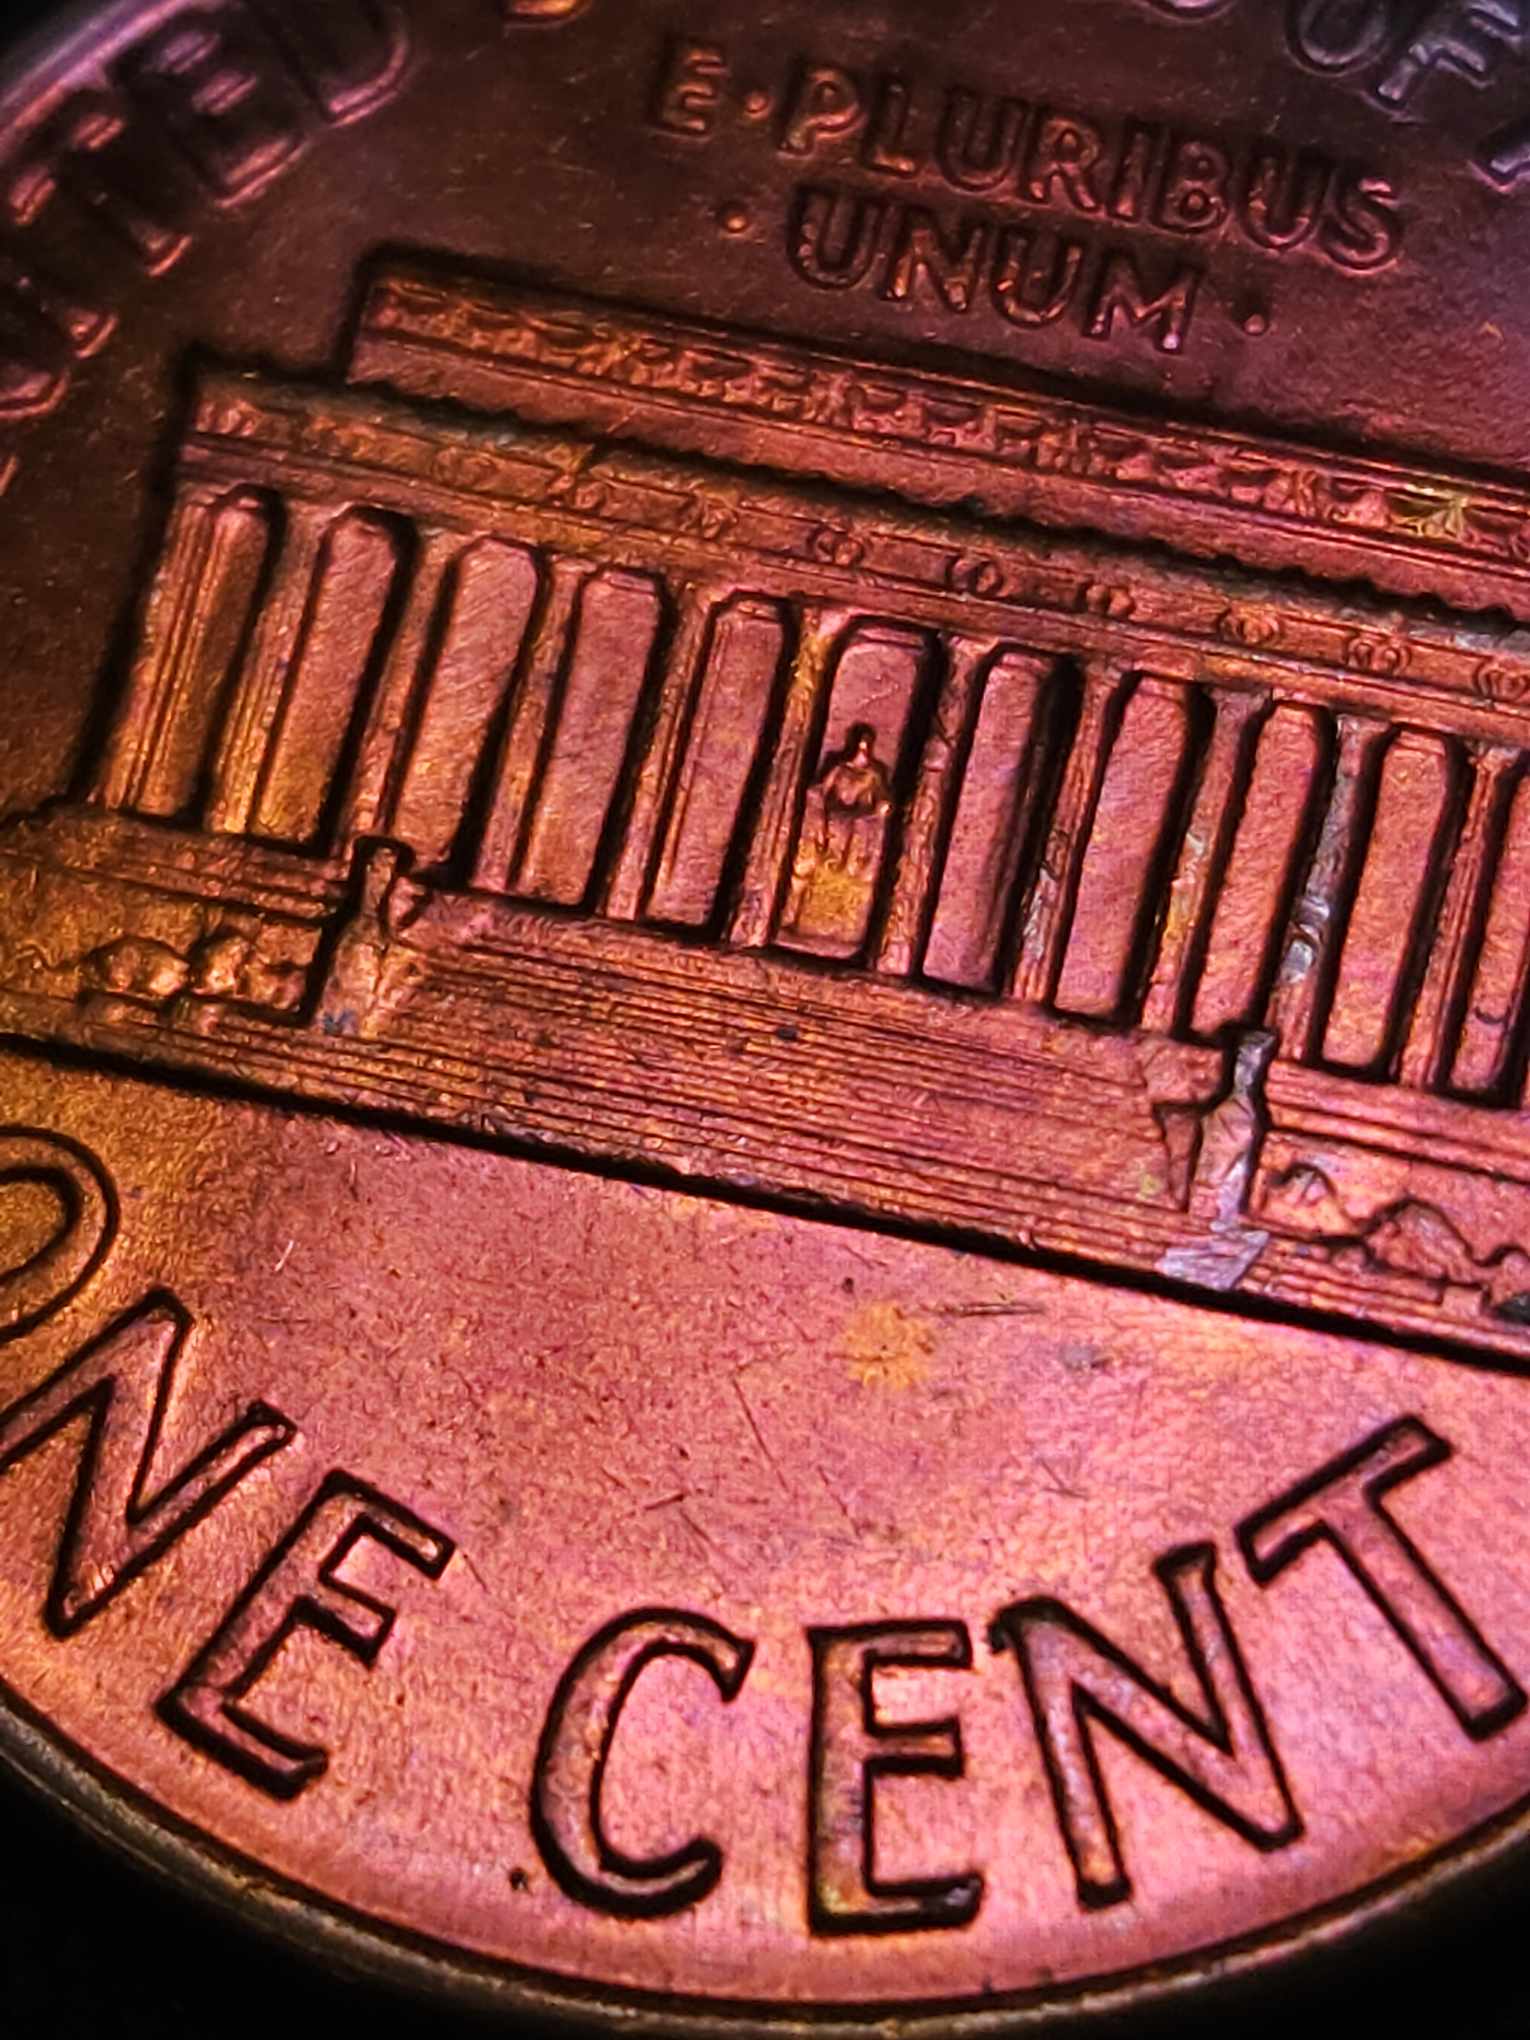 1959 D Lincoln Memorial Cent Bu Errors & Oddities